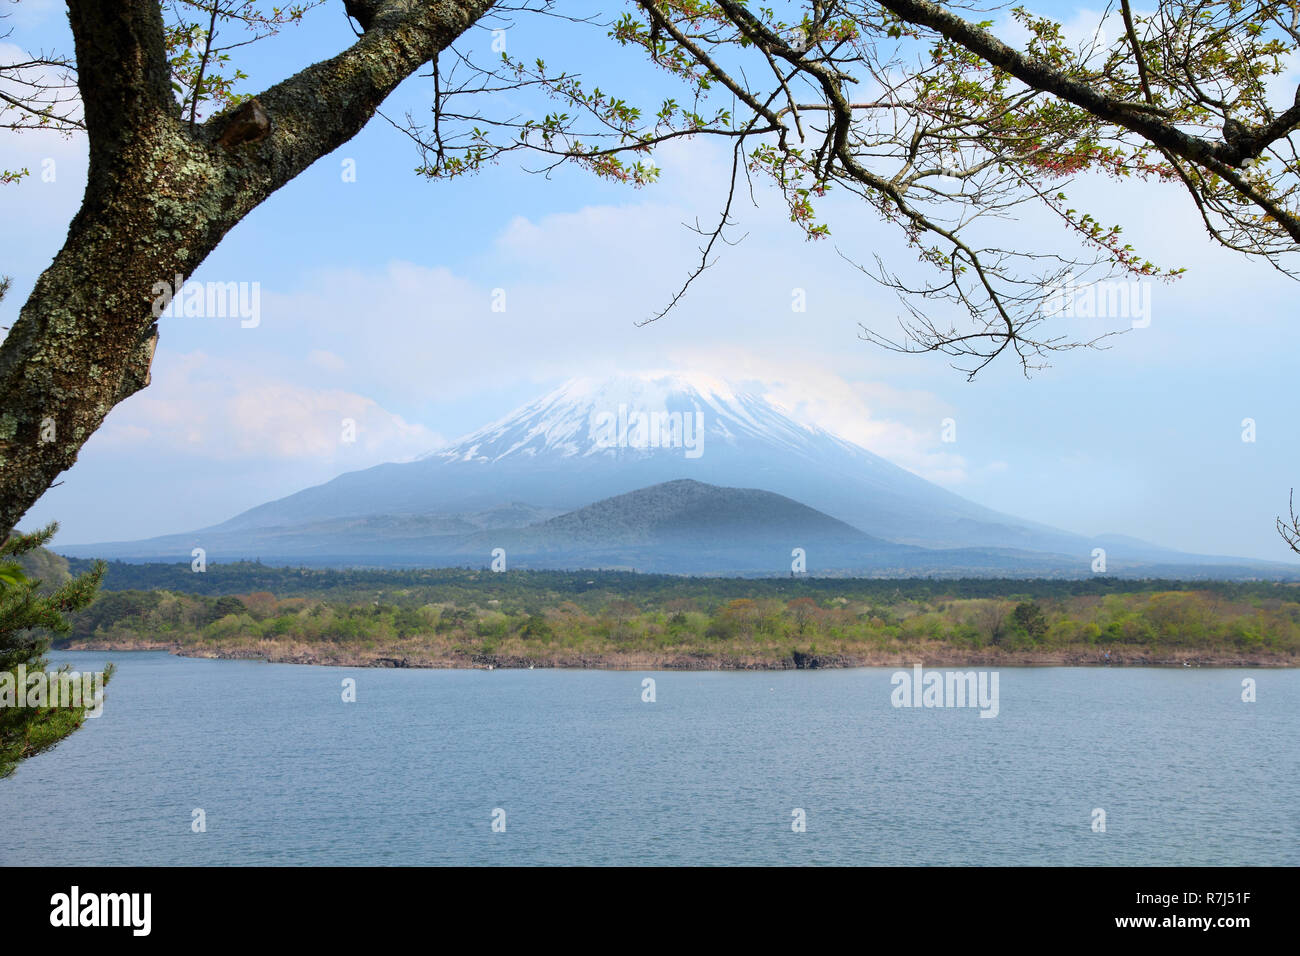 Japan landscape with Mount Fuji - Lake Shoji (Shojiko) and the ...